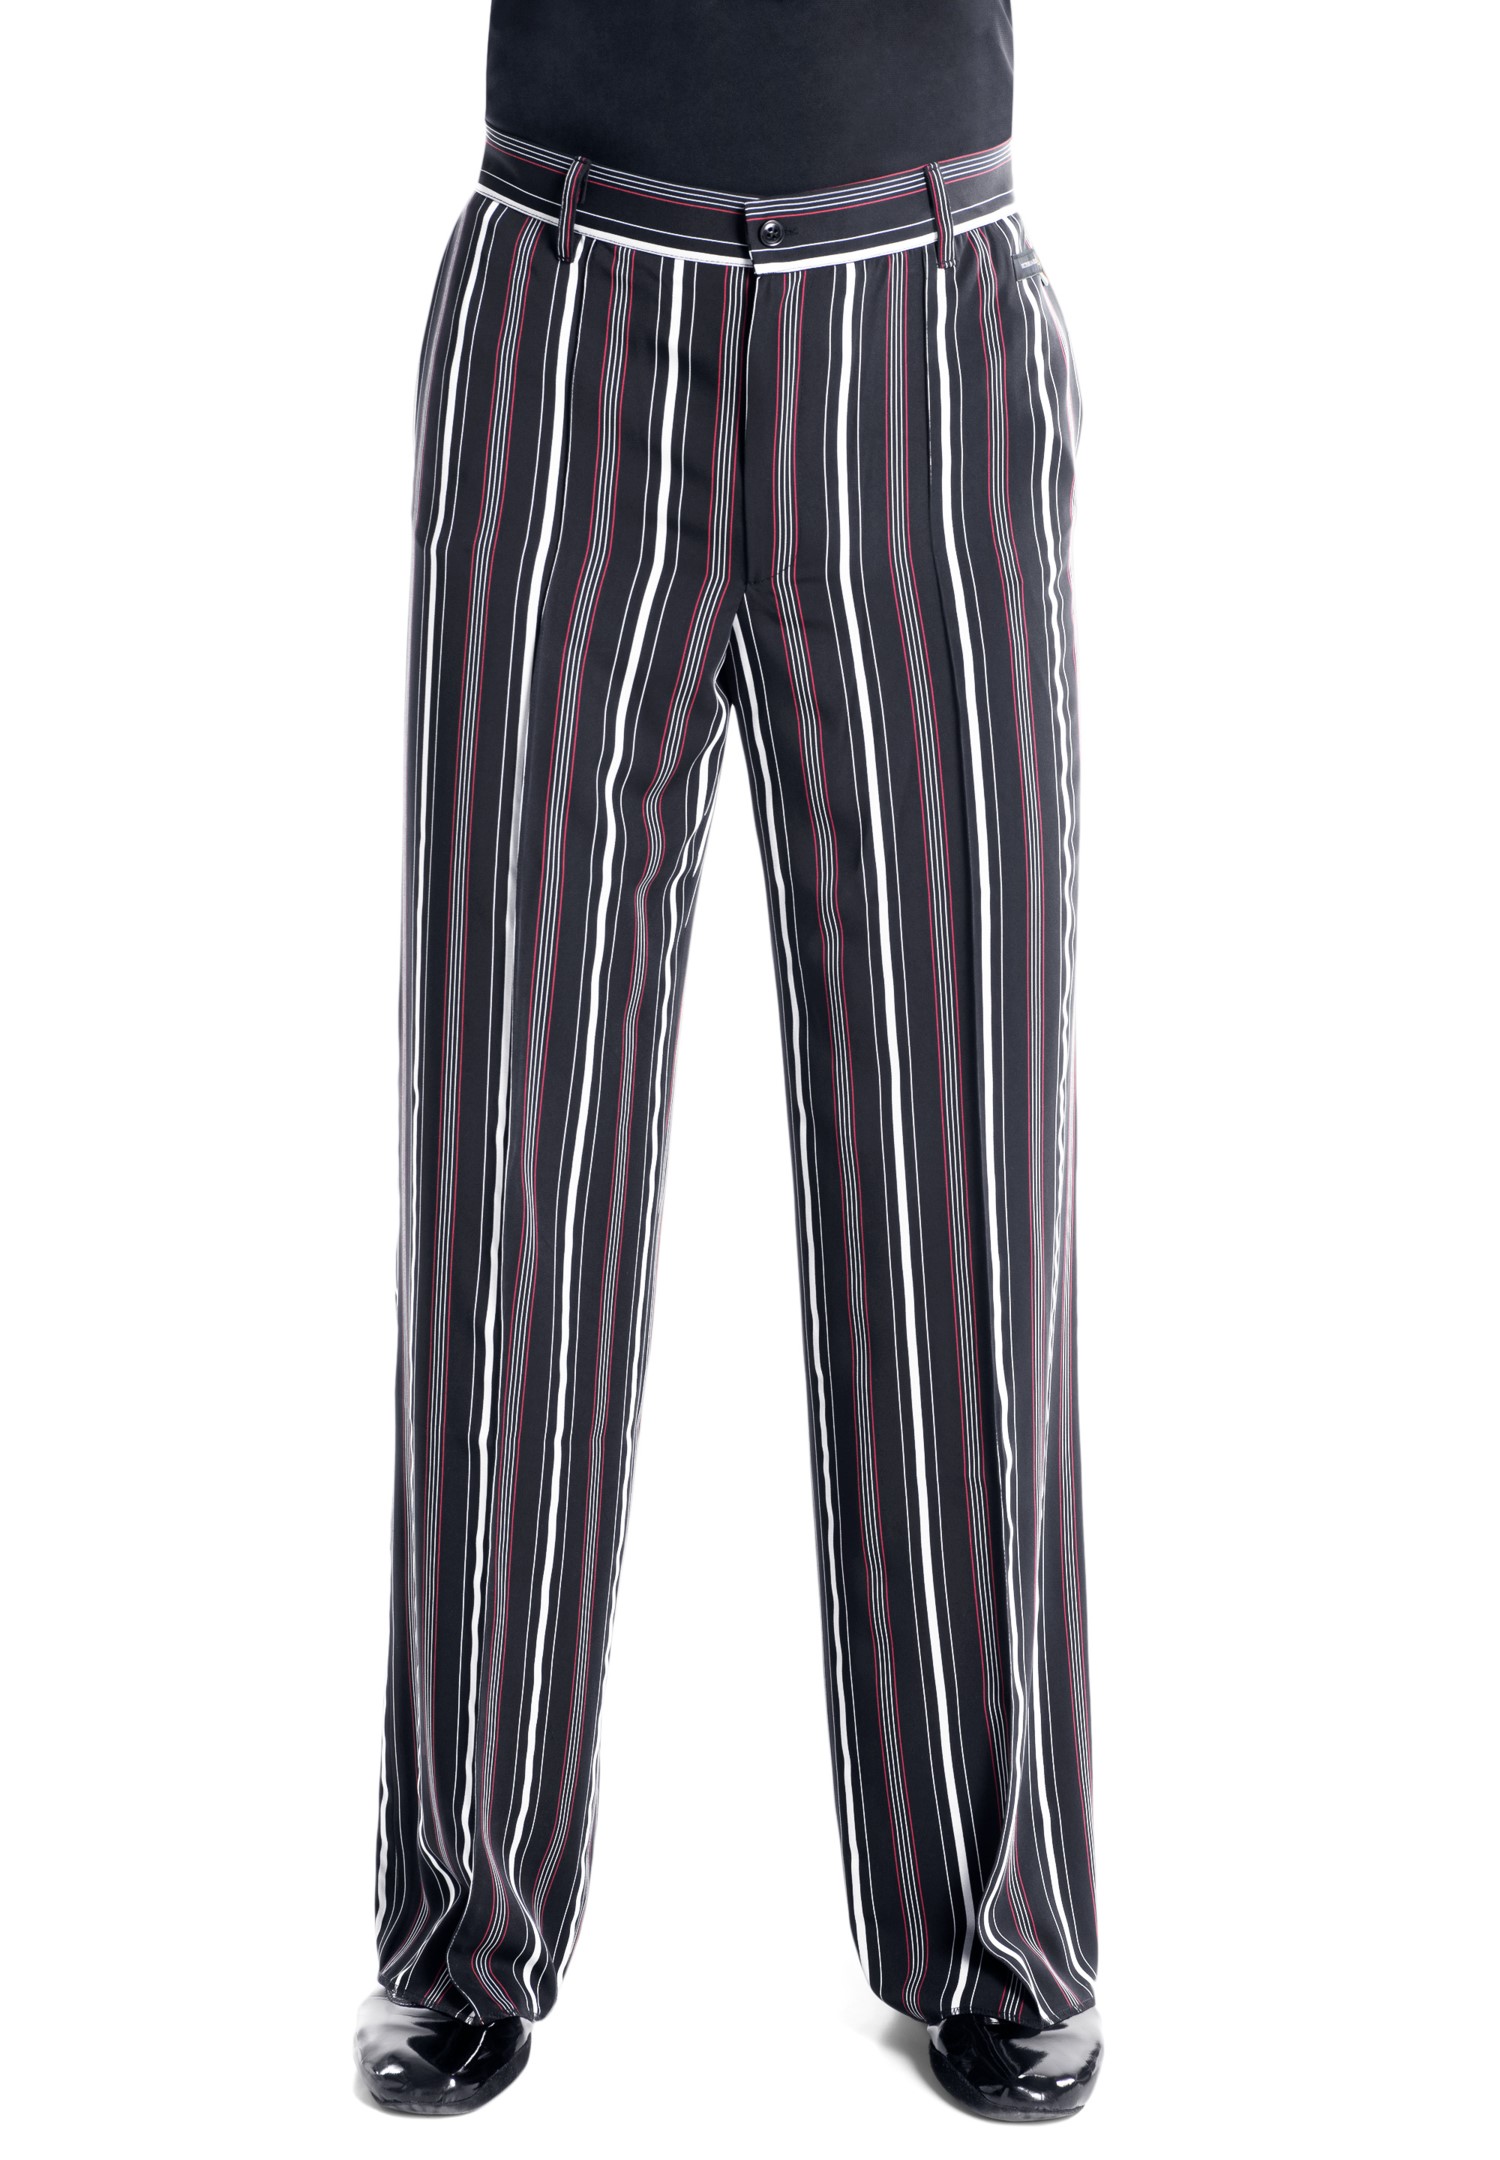 https://www.danceshopper.com/images/dancewear/menswear/Victoria-Blitz-Mens-Pinstripe-Trousers-UOMO002-Black_pinstripe_w__red_line-b.jpg?width=1500&height=2160&f.sharpen=10&a.Contrast=0&a.Saturation=0&a.Brightness=0&v=2024